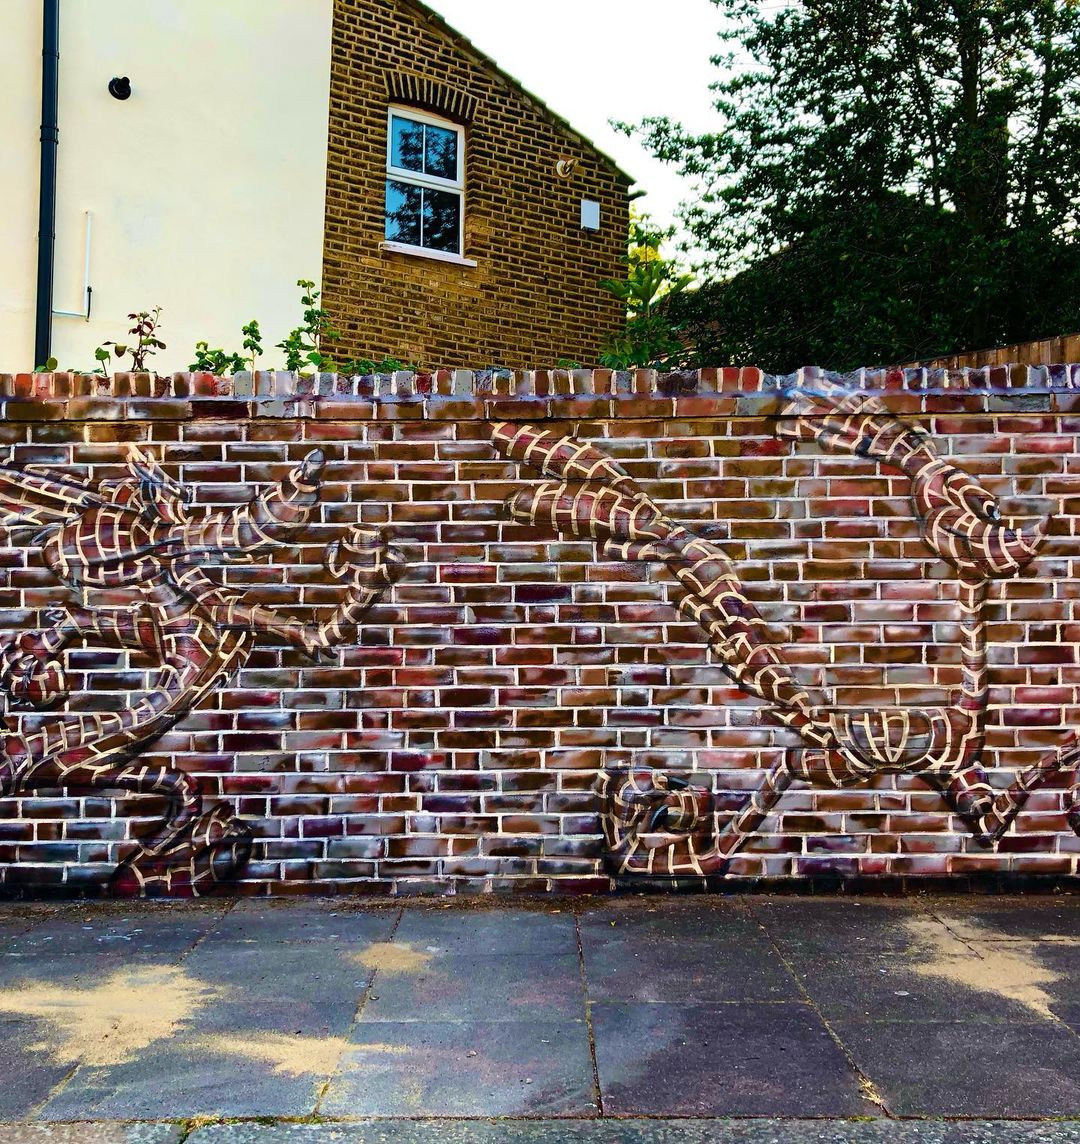 brababella: #Streetart: '#WileECoyote and the #RoadRunner' by #Pad @ #Beckenham, UK
More pics at: barbarapicci.com/2023/07/28/str…
#brickart #streetartBeckenham #streetartuk #ukstreetart #arteurbana #urbanart #murals #muralism #contemporaryart #artecontemporanea